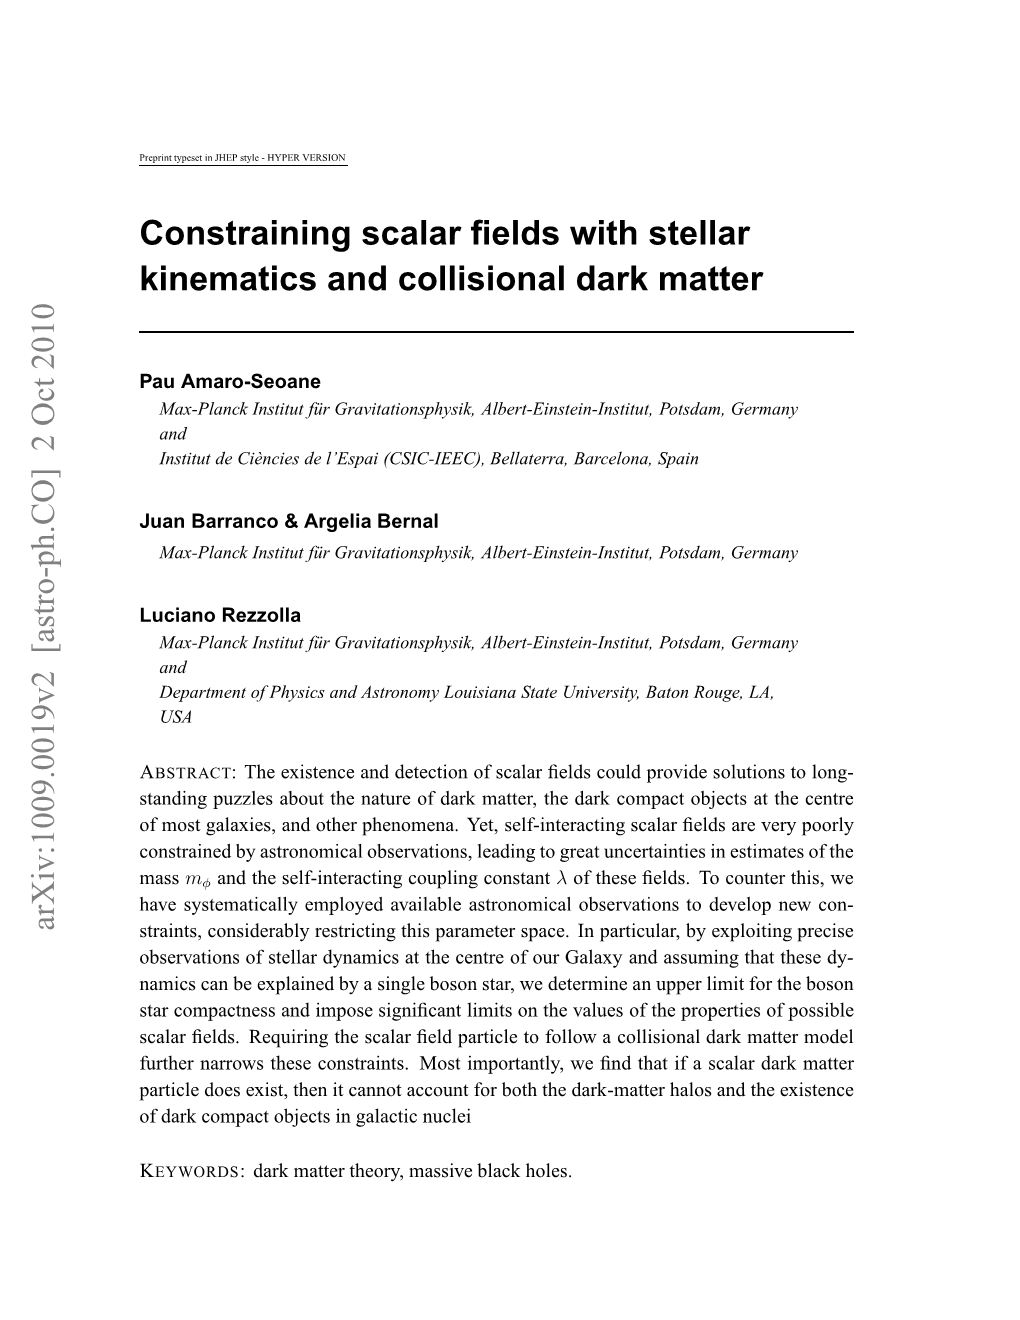 Constraining Scalar Fields with Stellar Kinematics and Collisional Dark Matter